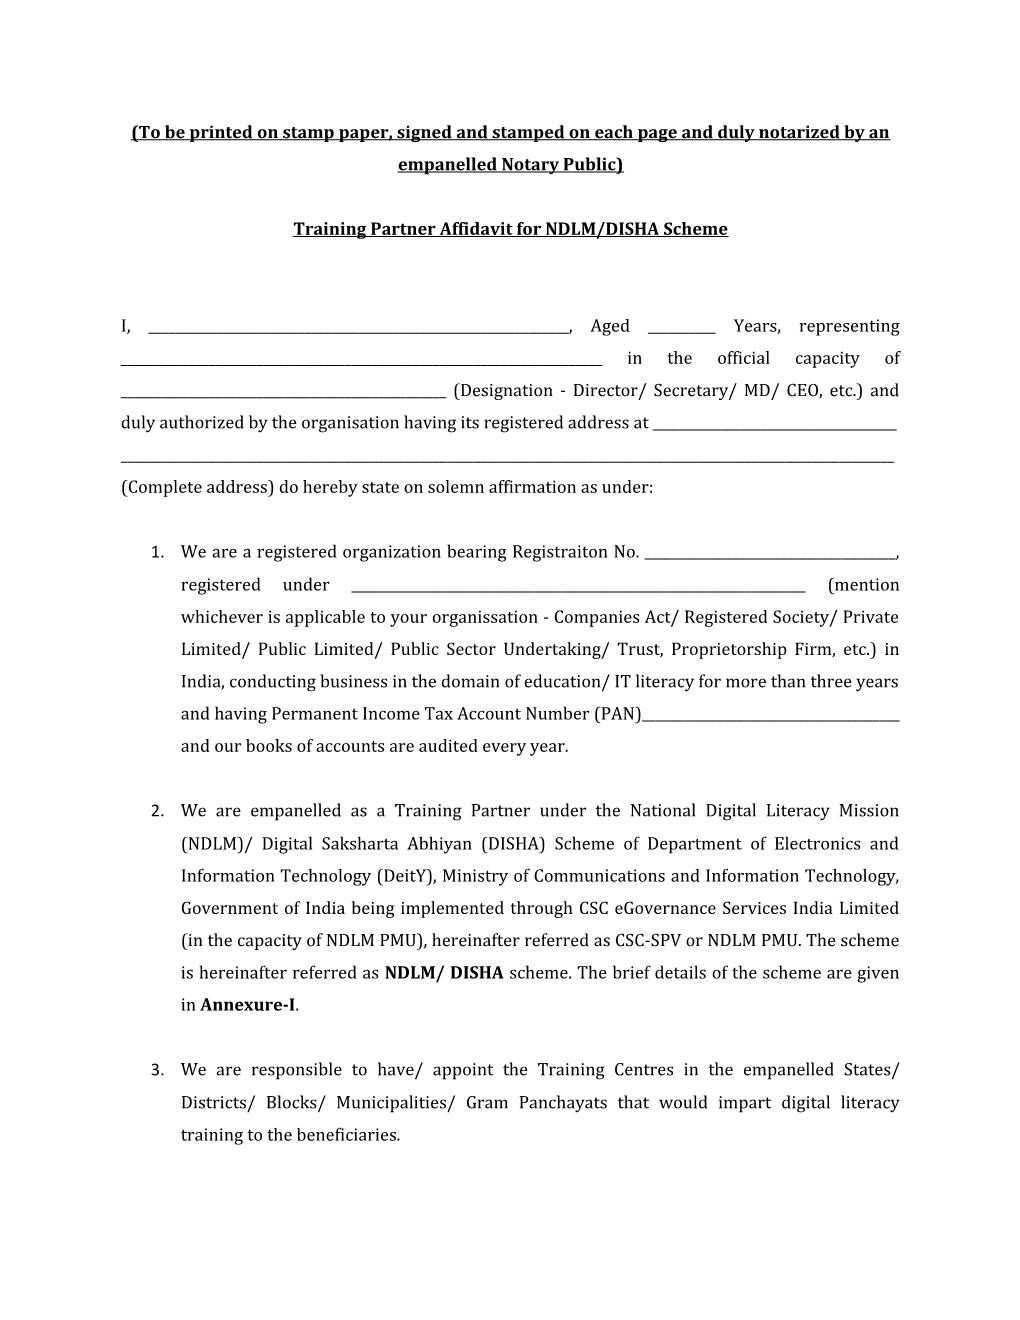 Training Partner Affidavit for NDLM/DISHA Scheme